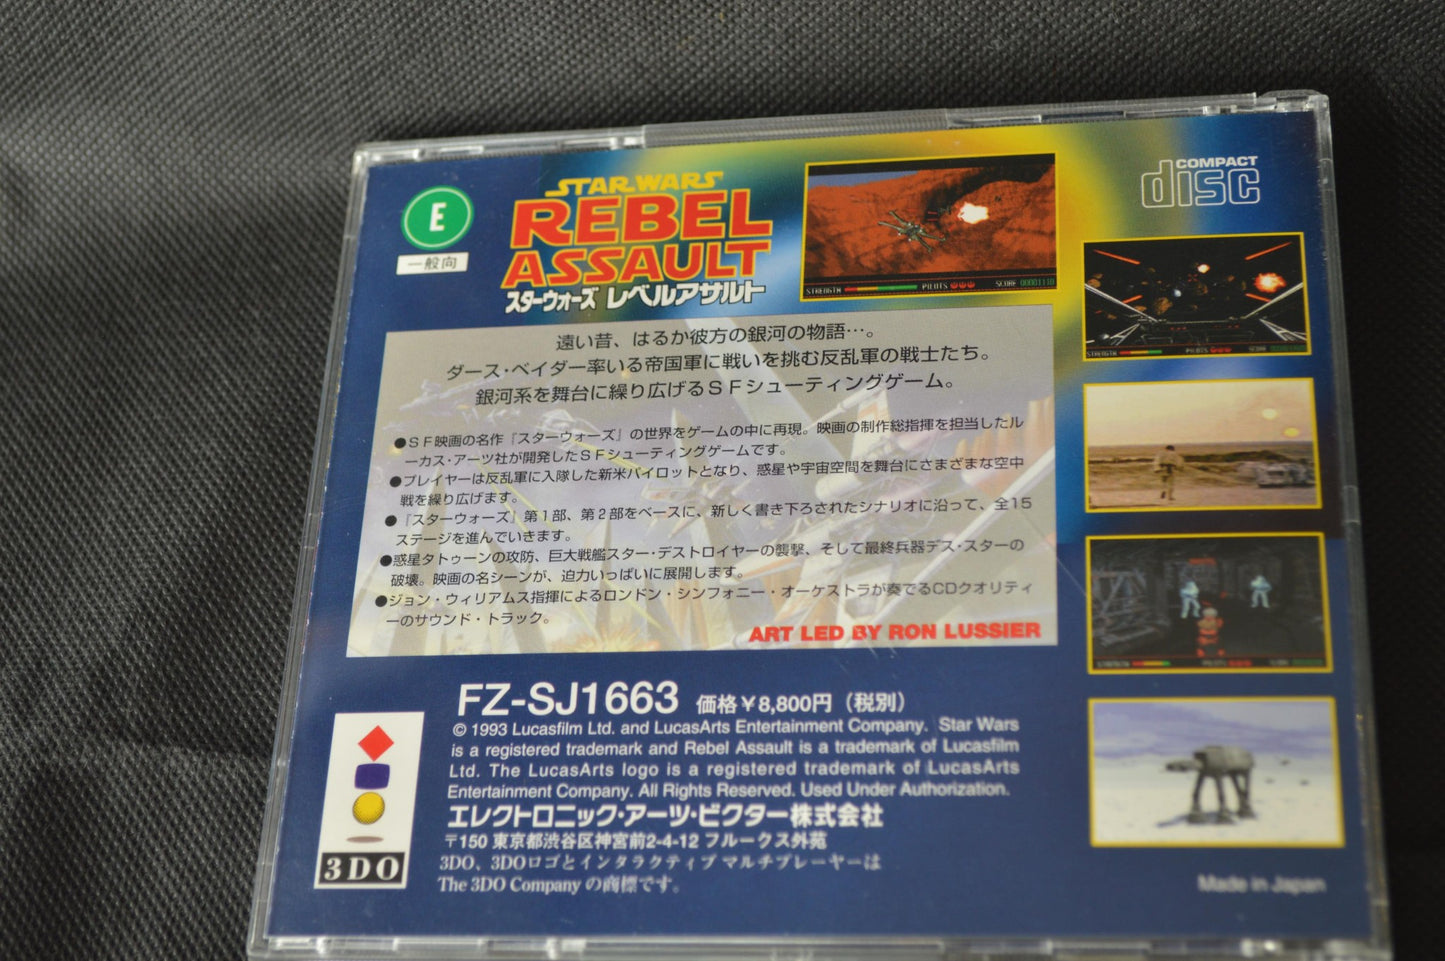 STAR WARS REBEL ASSAULT Panasonic 3DO Real Game Disk, Manual, Box set-f1114-